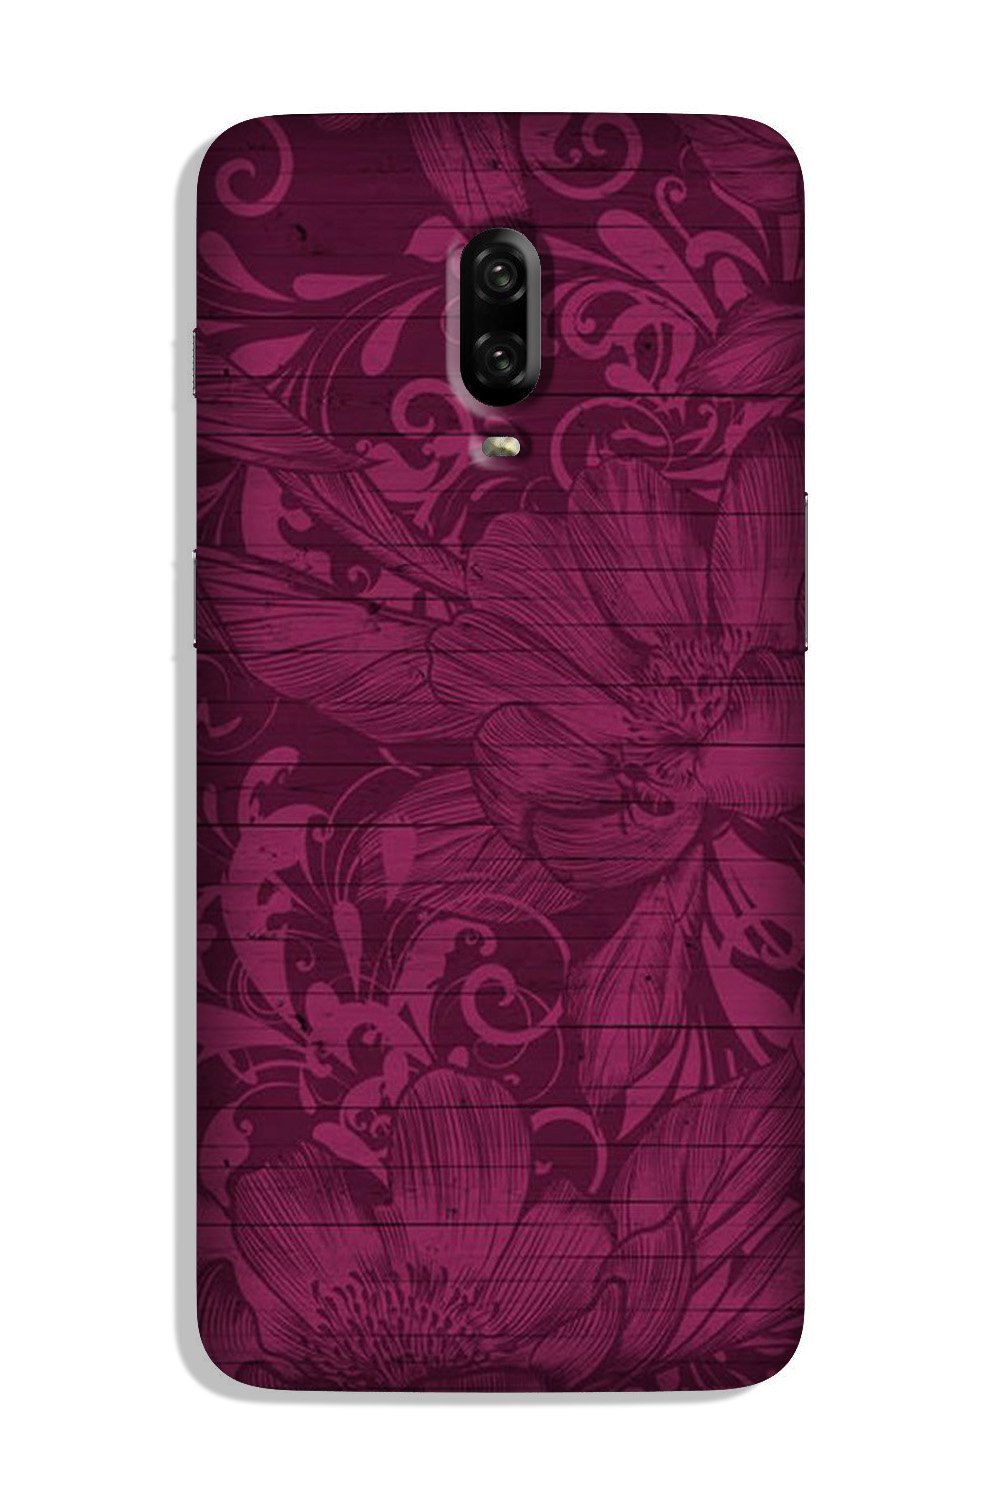 Purple Backround Case for OnePlus 7